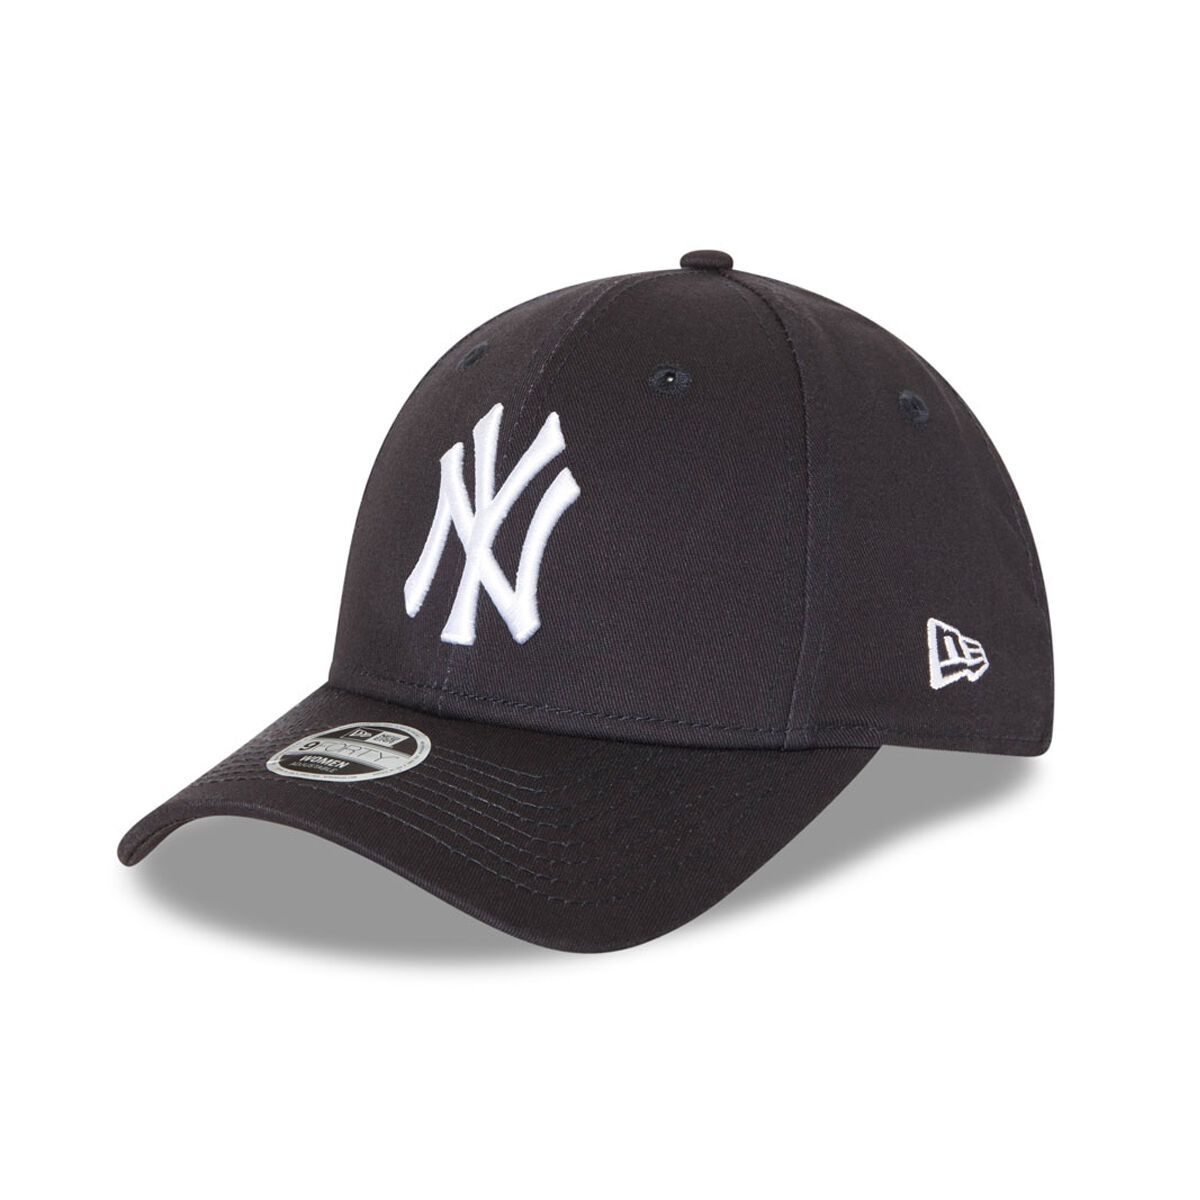 Official MLB Baseball Hats, MLB Caps, Baseball Hat, Beanies